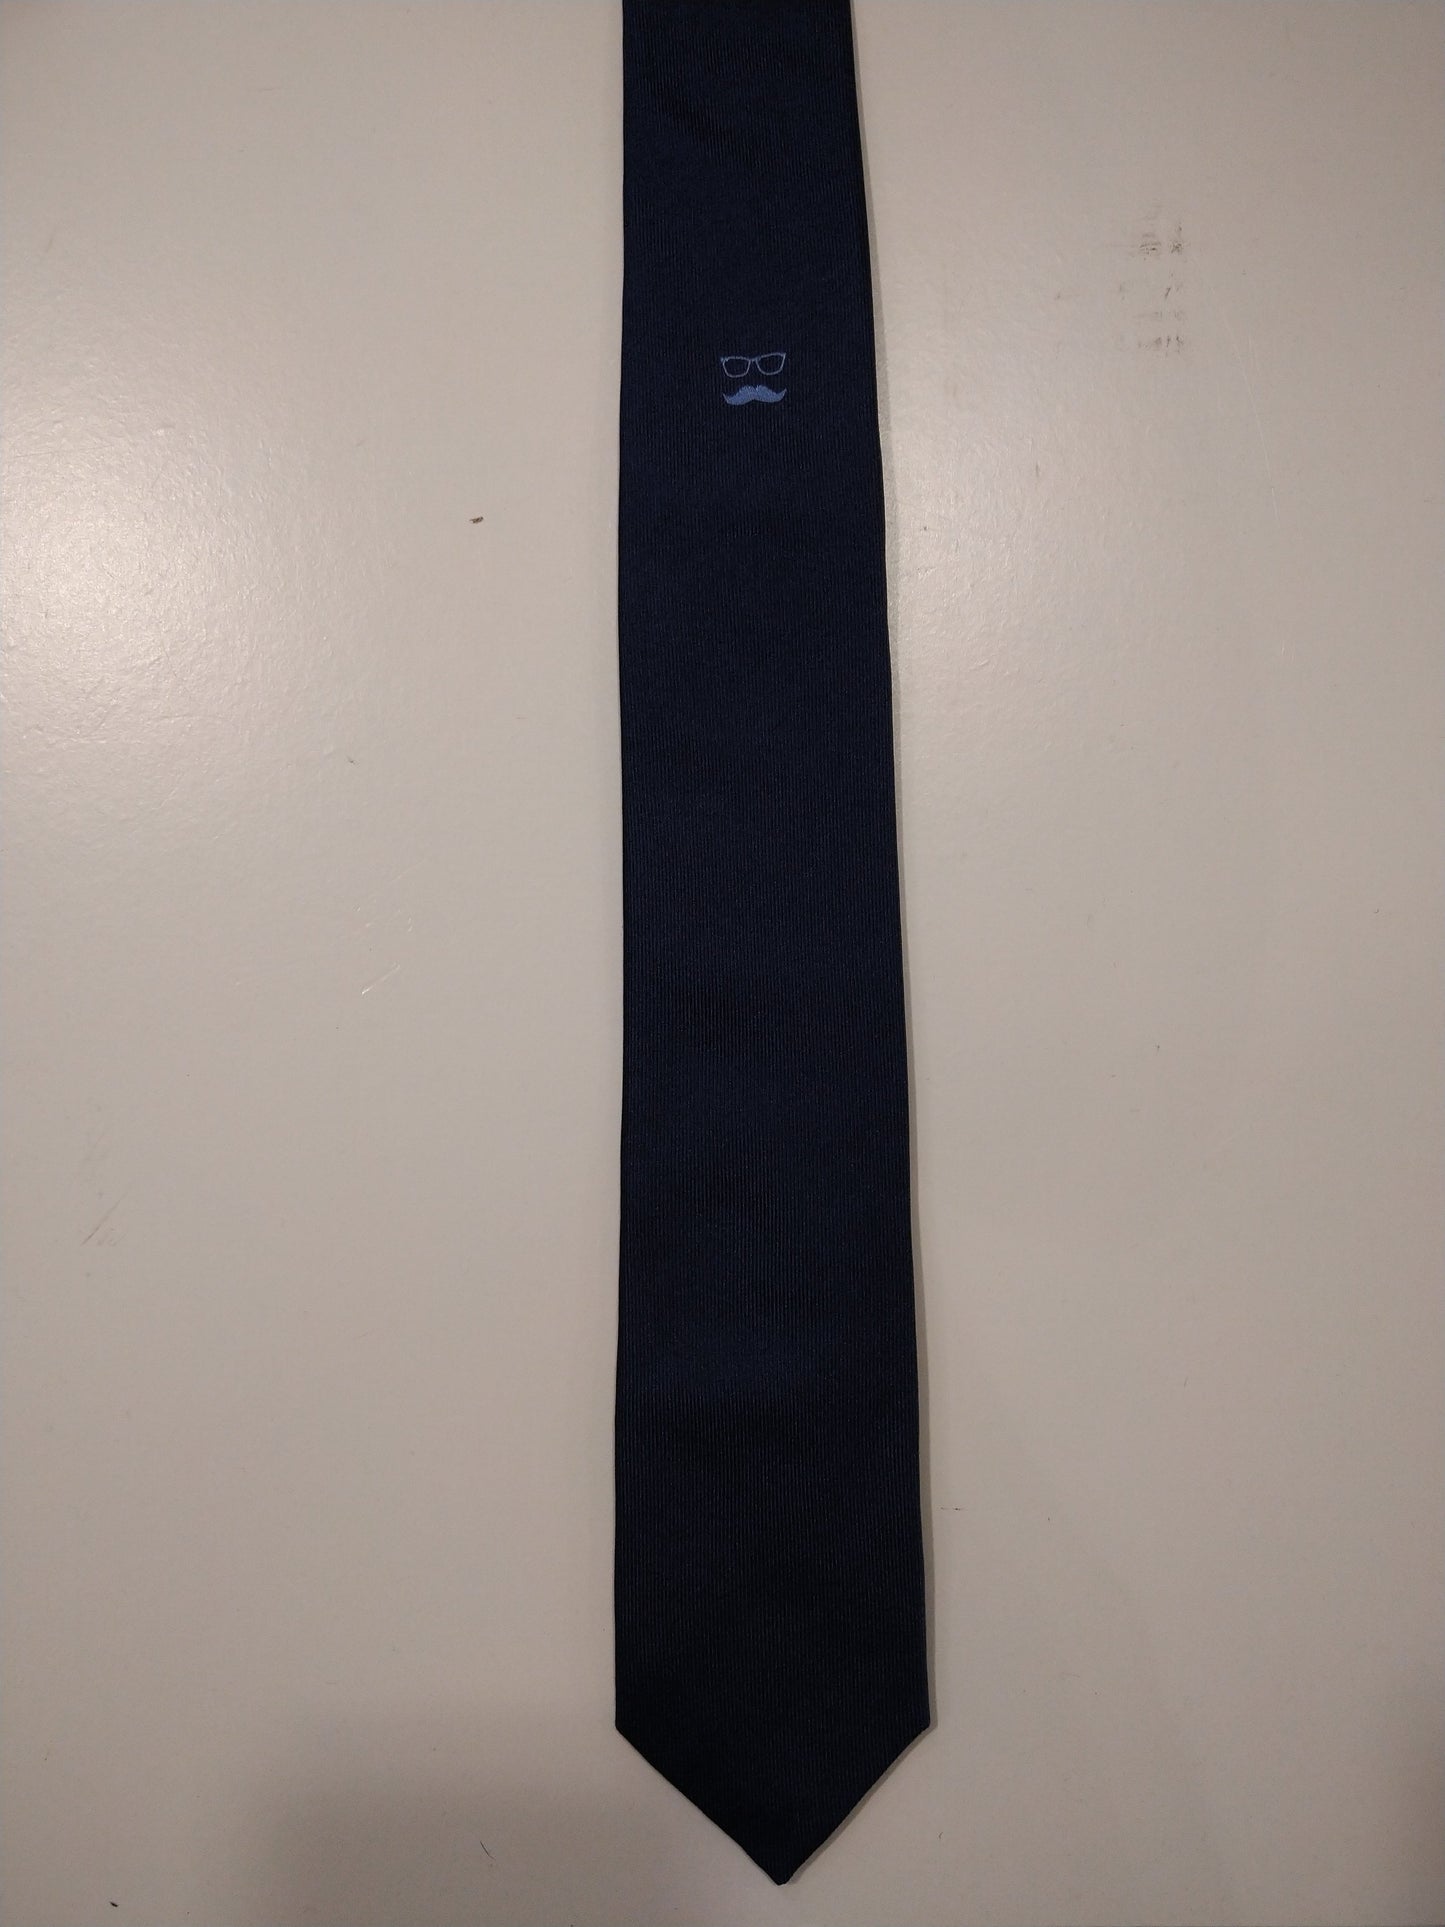 Siete diales London Silk estrecho corbata. Azul